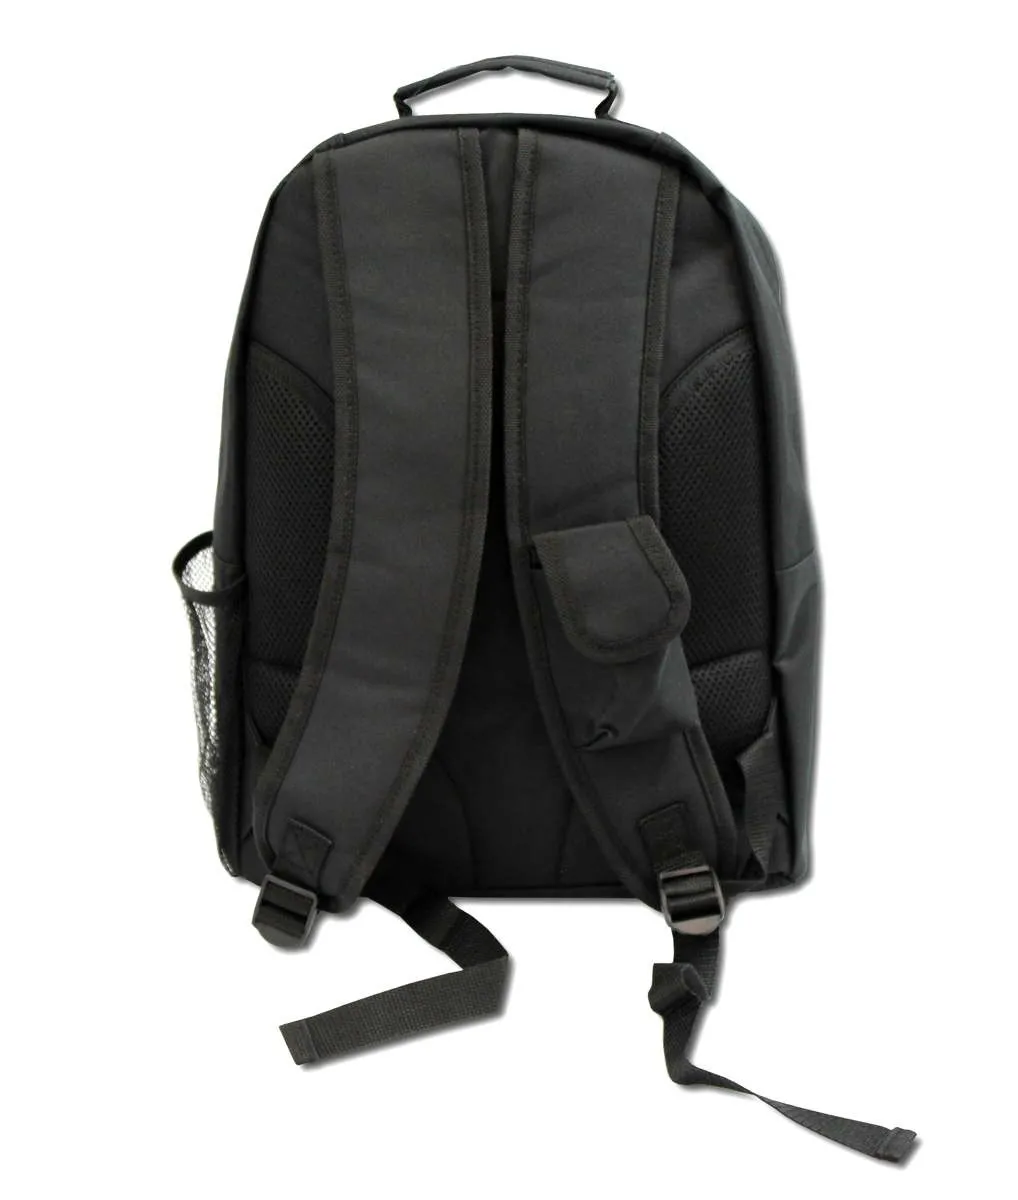 Shotokan Tiger backpack